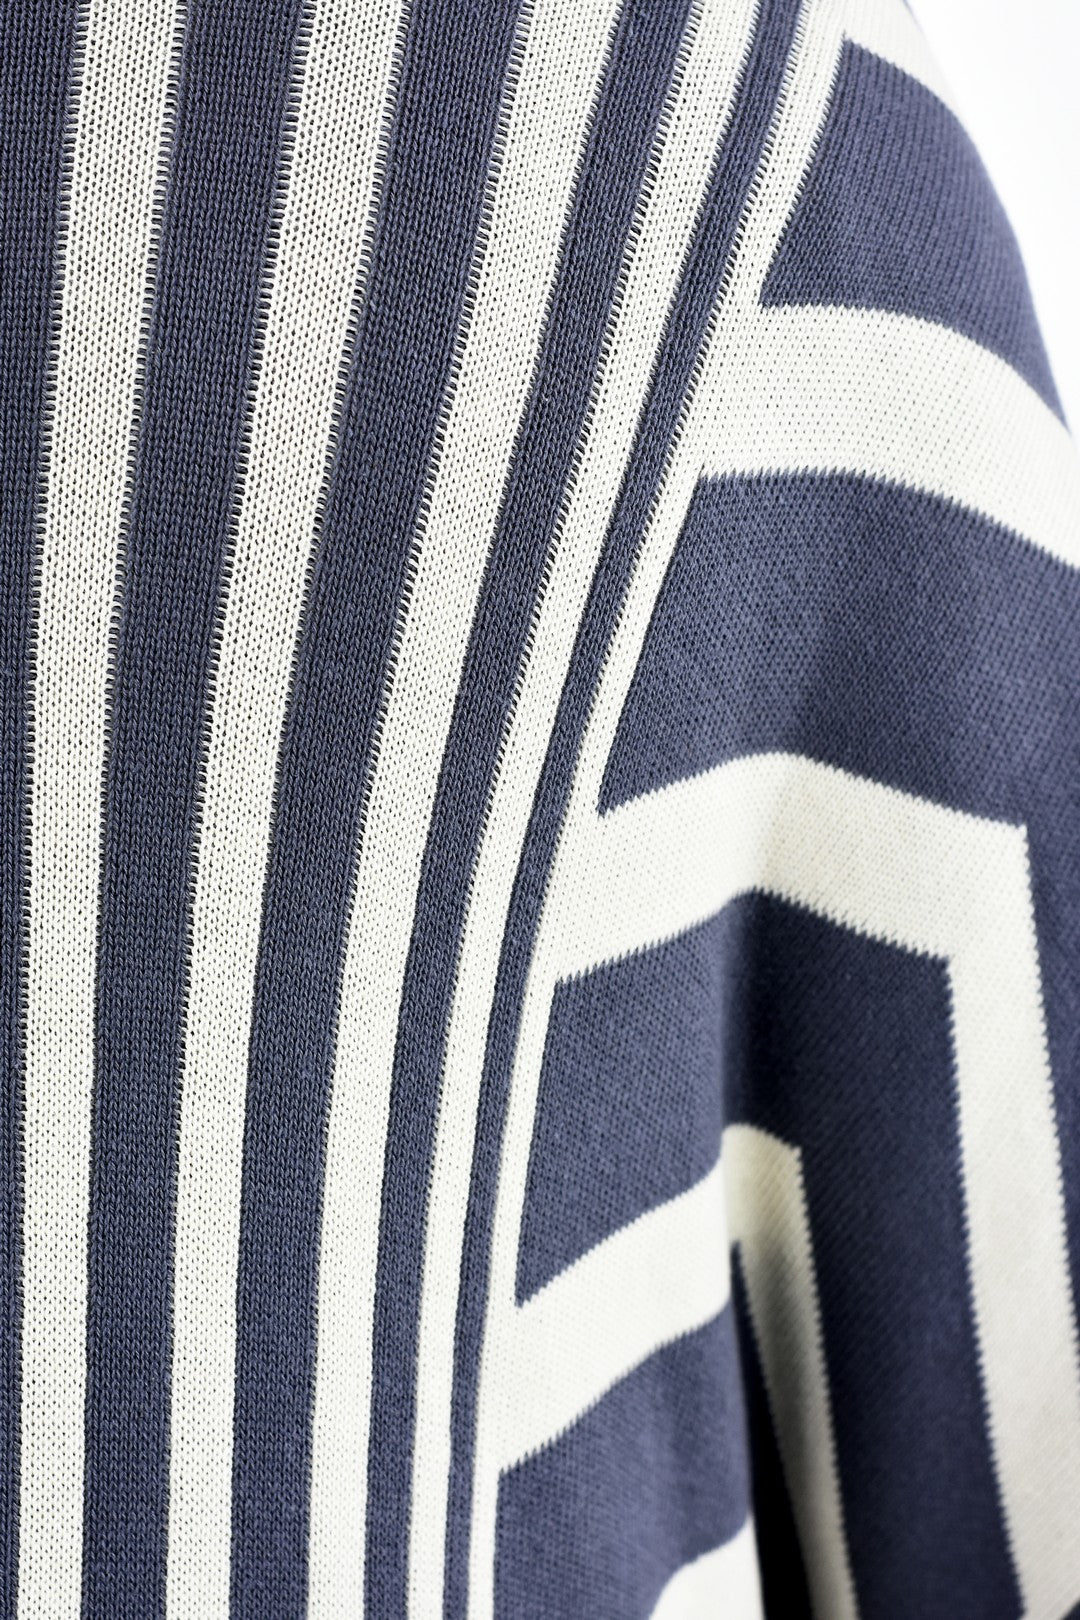 Mens Knitwear Zebra Poncho in Slate Grey and Cream ZG5422